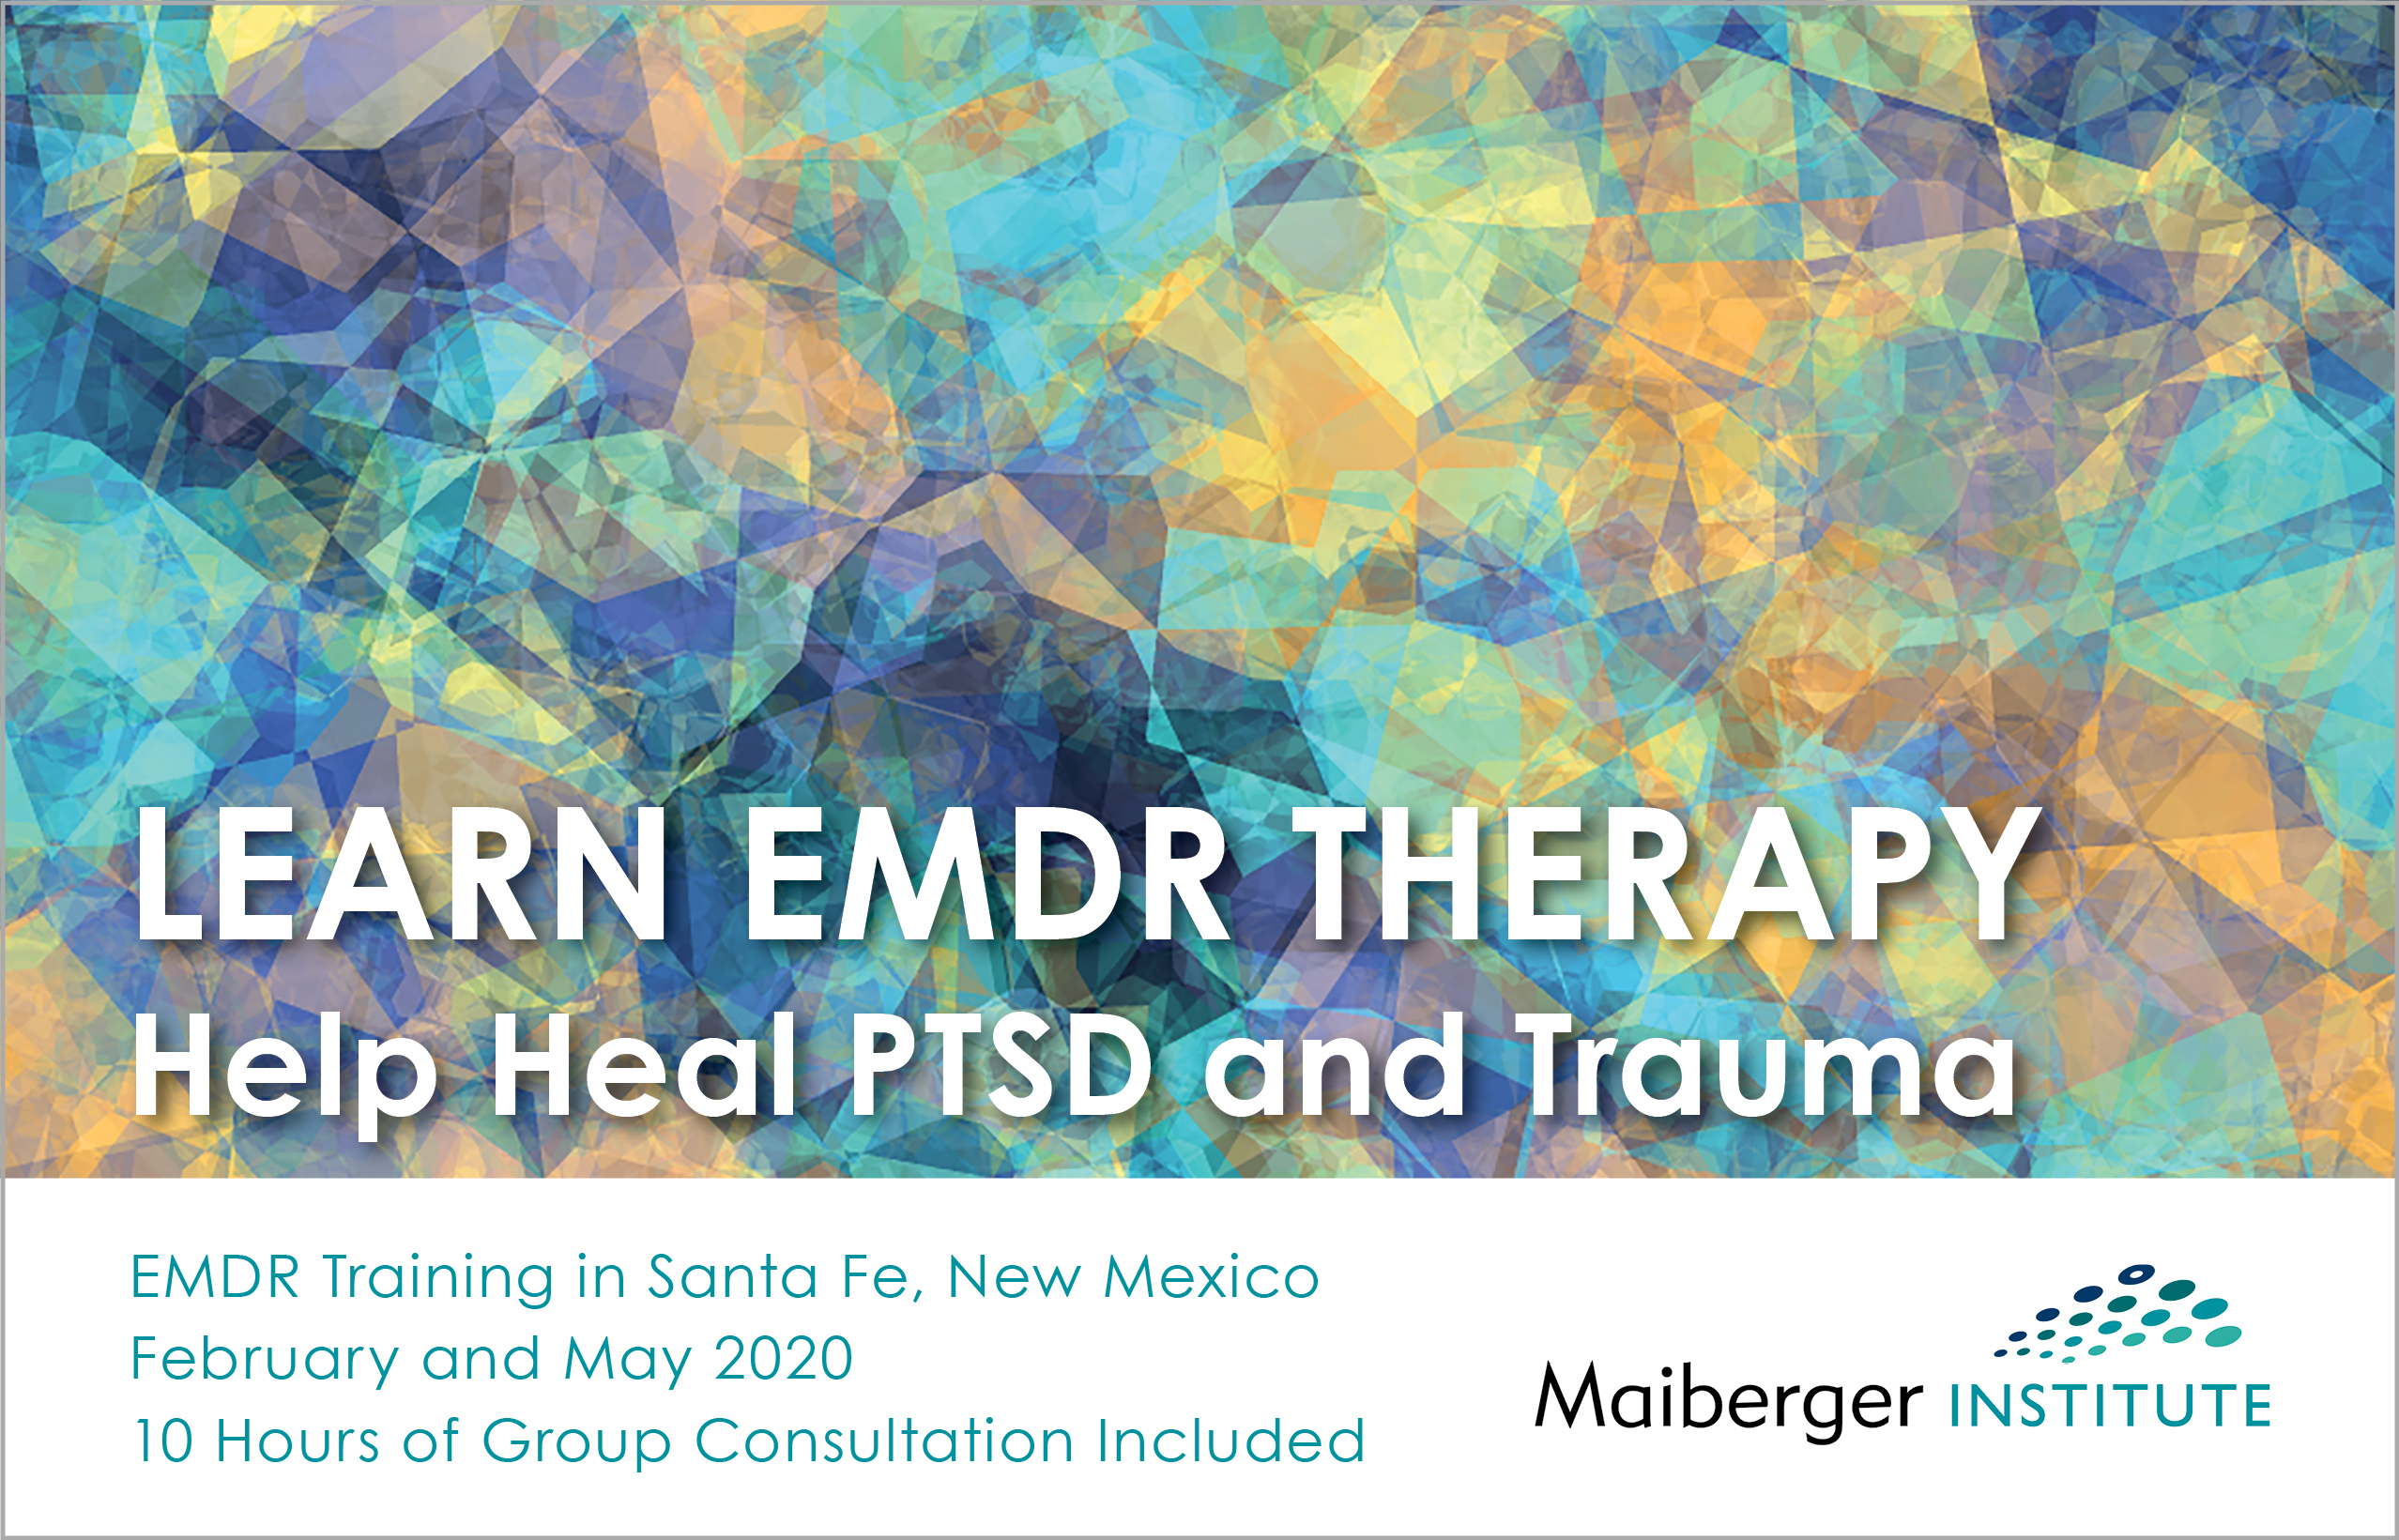 EMDR Training in Santa Fe, New Mexico - February and May 2020